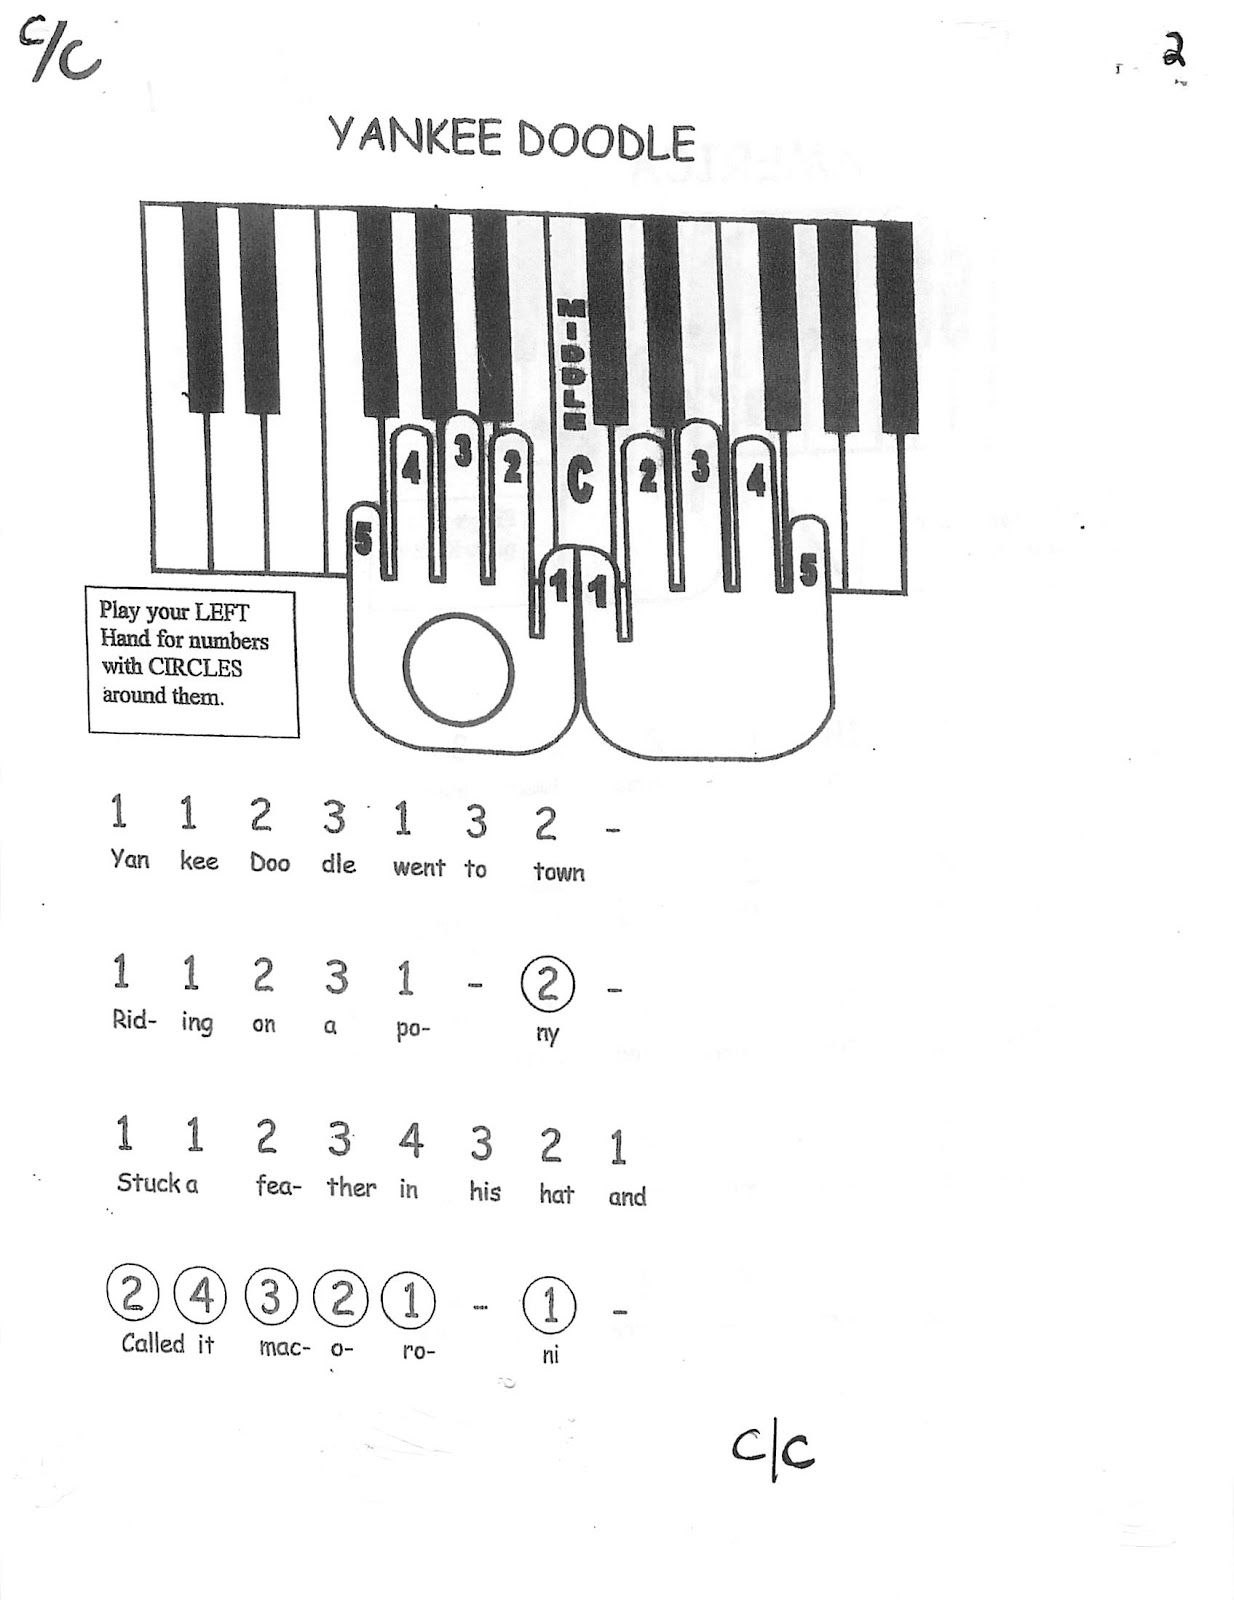 Собачий вальс по клавишам на картинке. Схема клавиш синтезатора по цифрам.